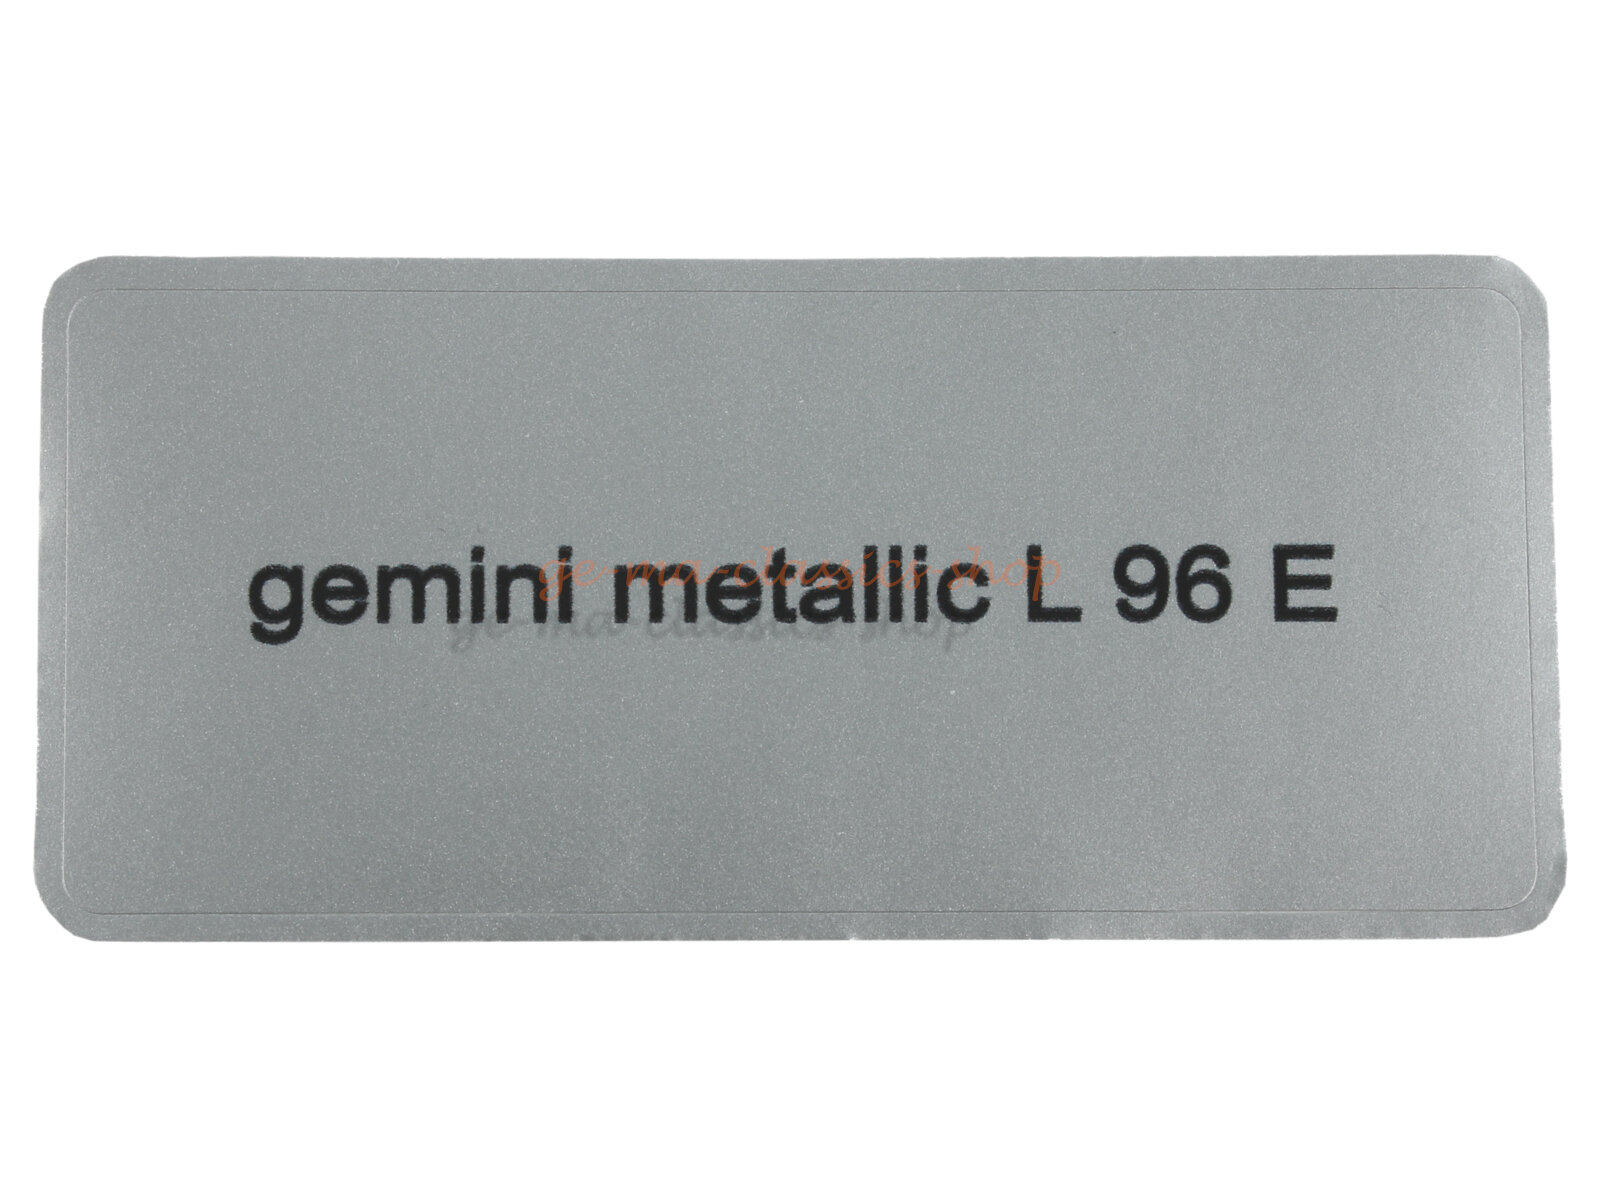 Aufkleber "gemini metallic L 96 E" Farbcode Sticker